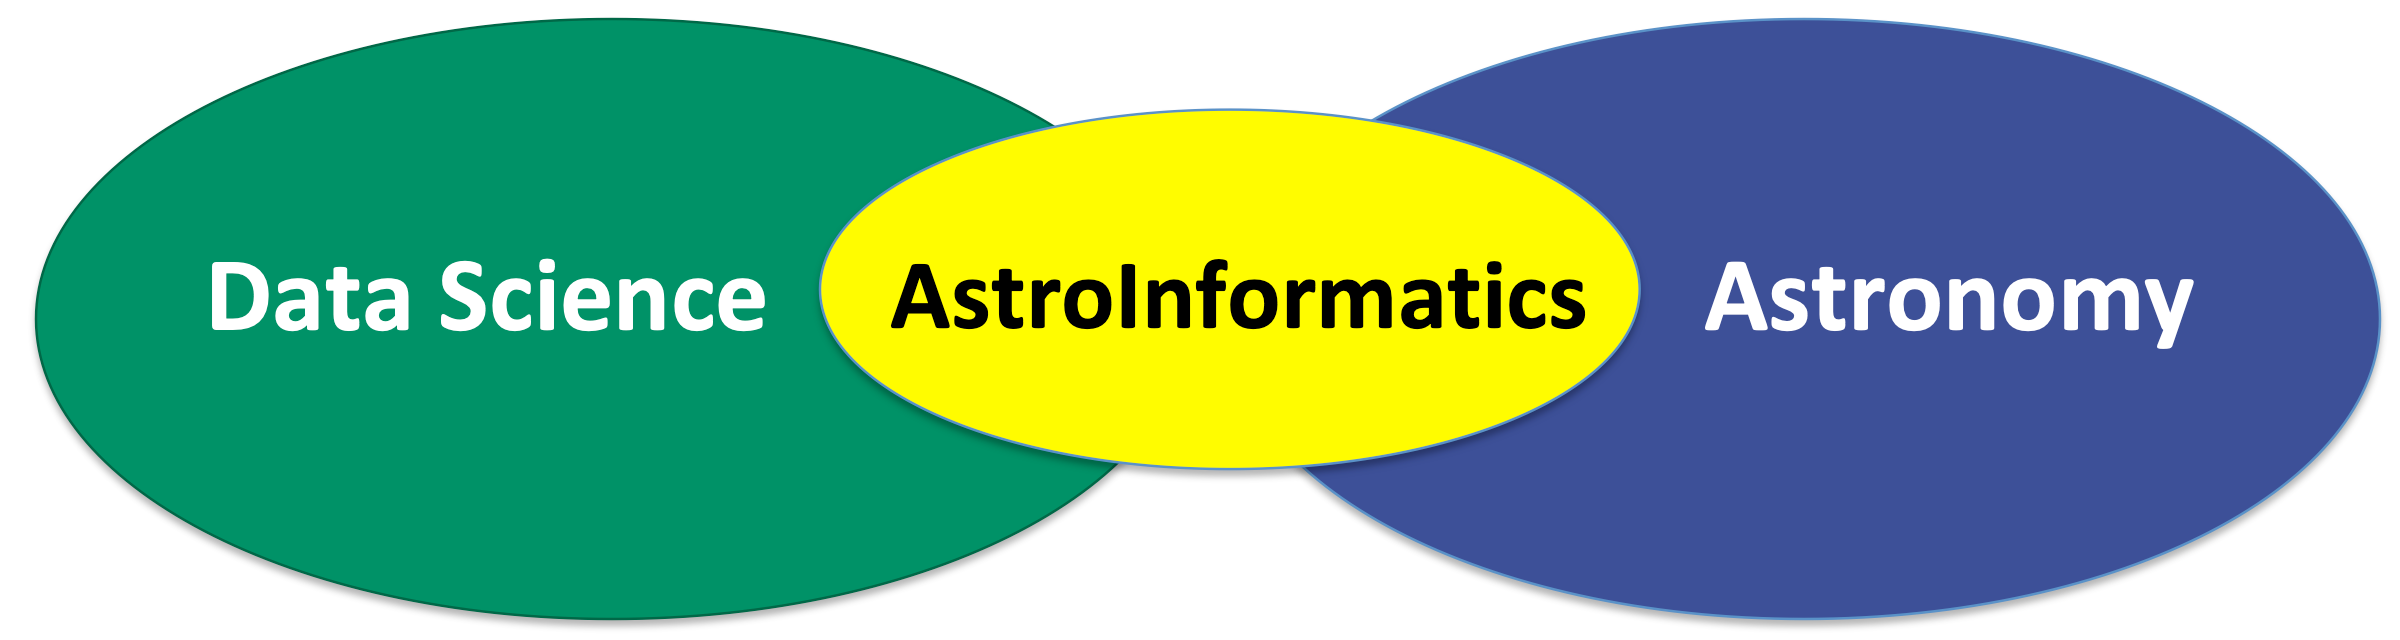 Astroinformatics figure 1